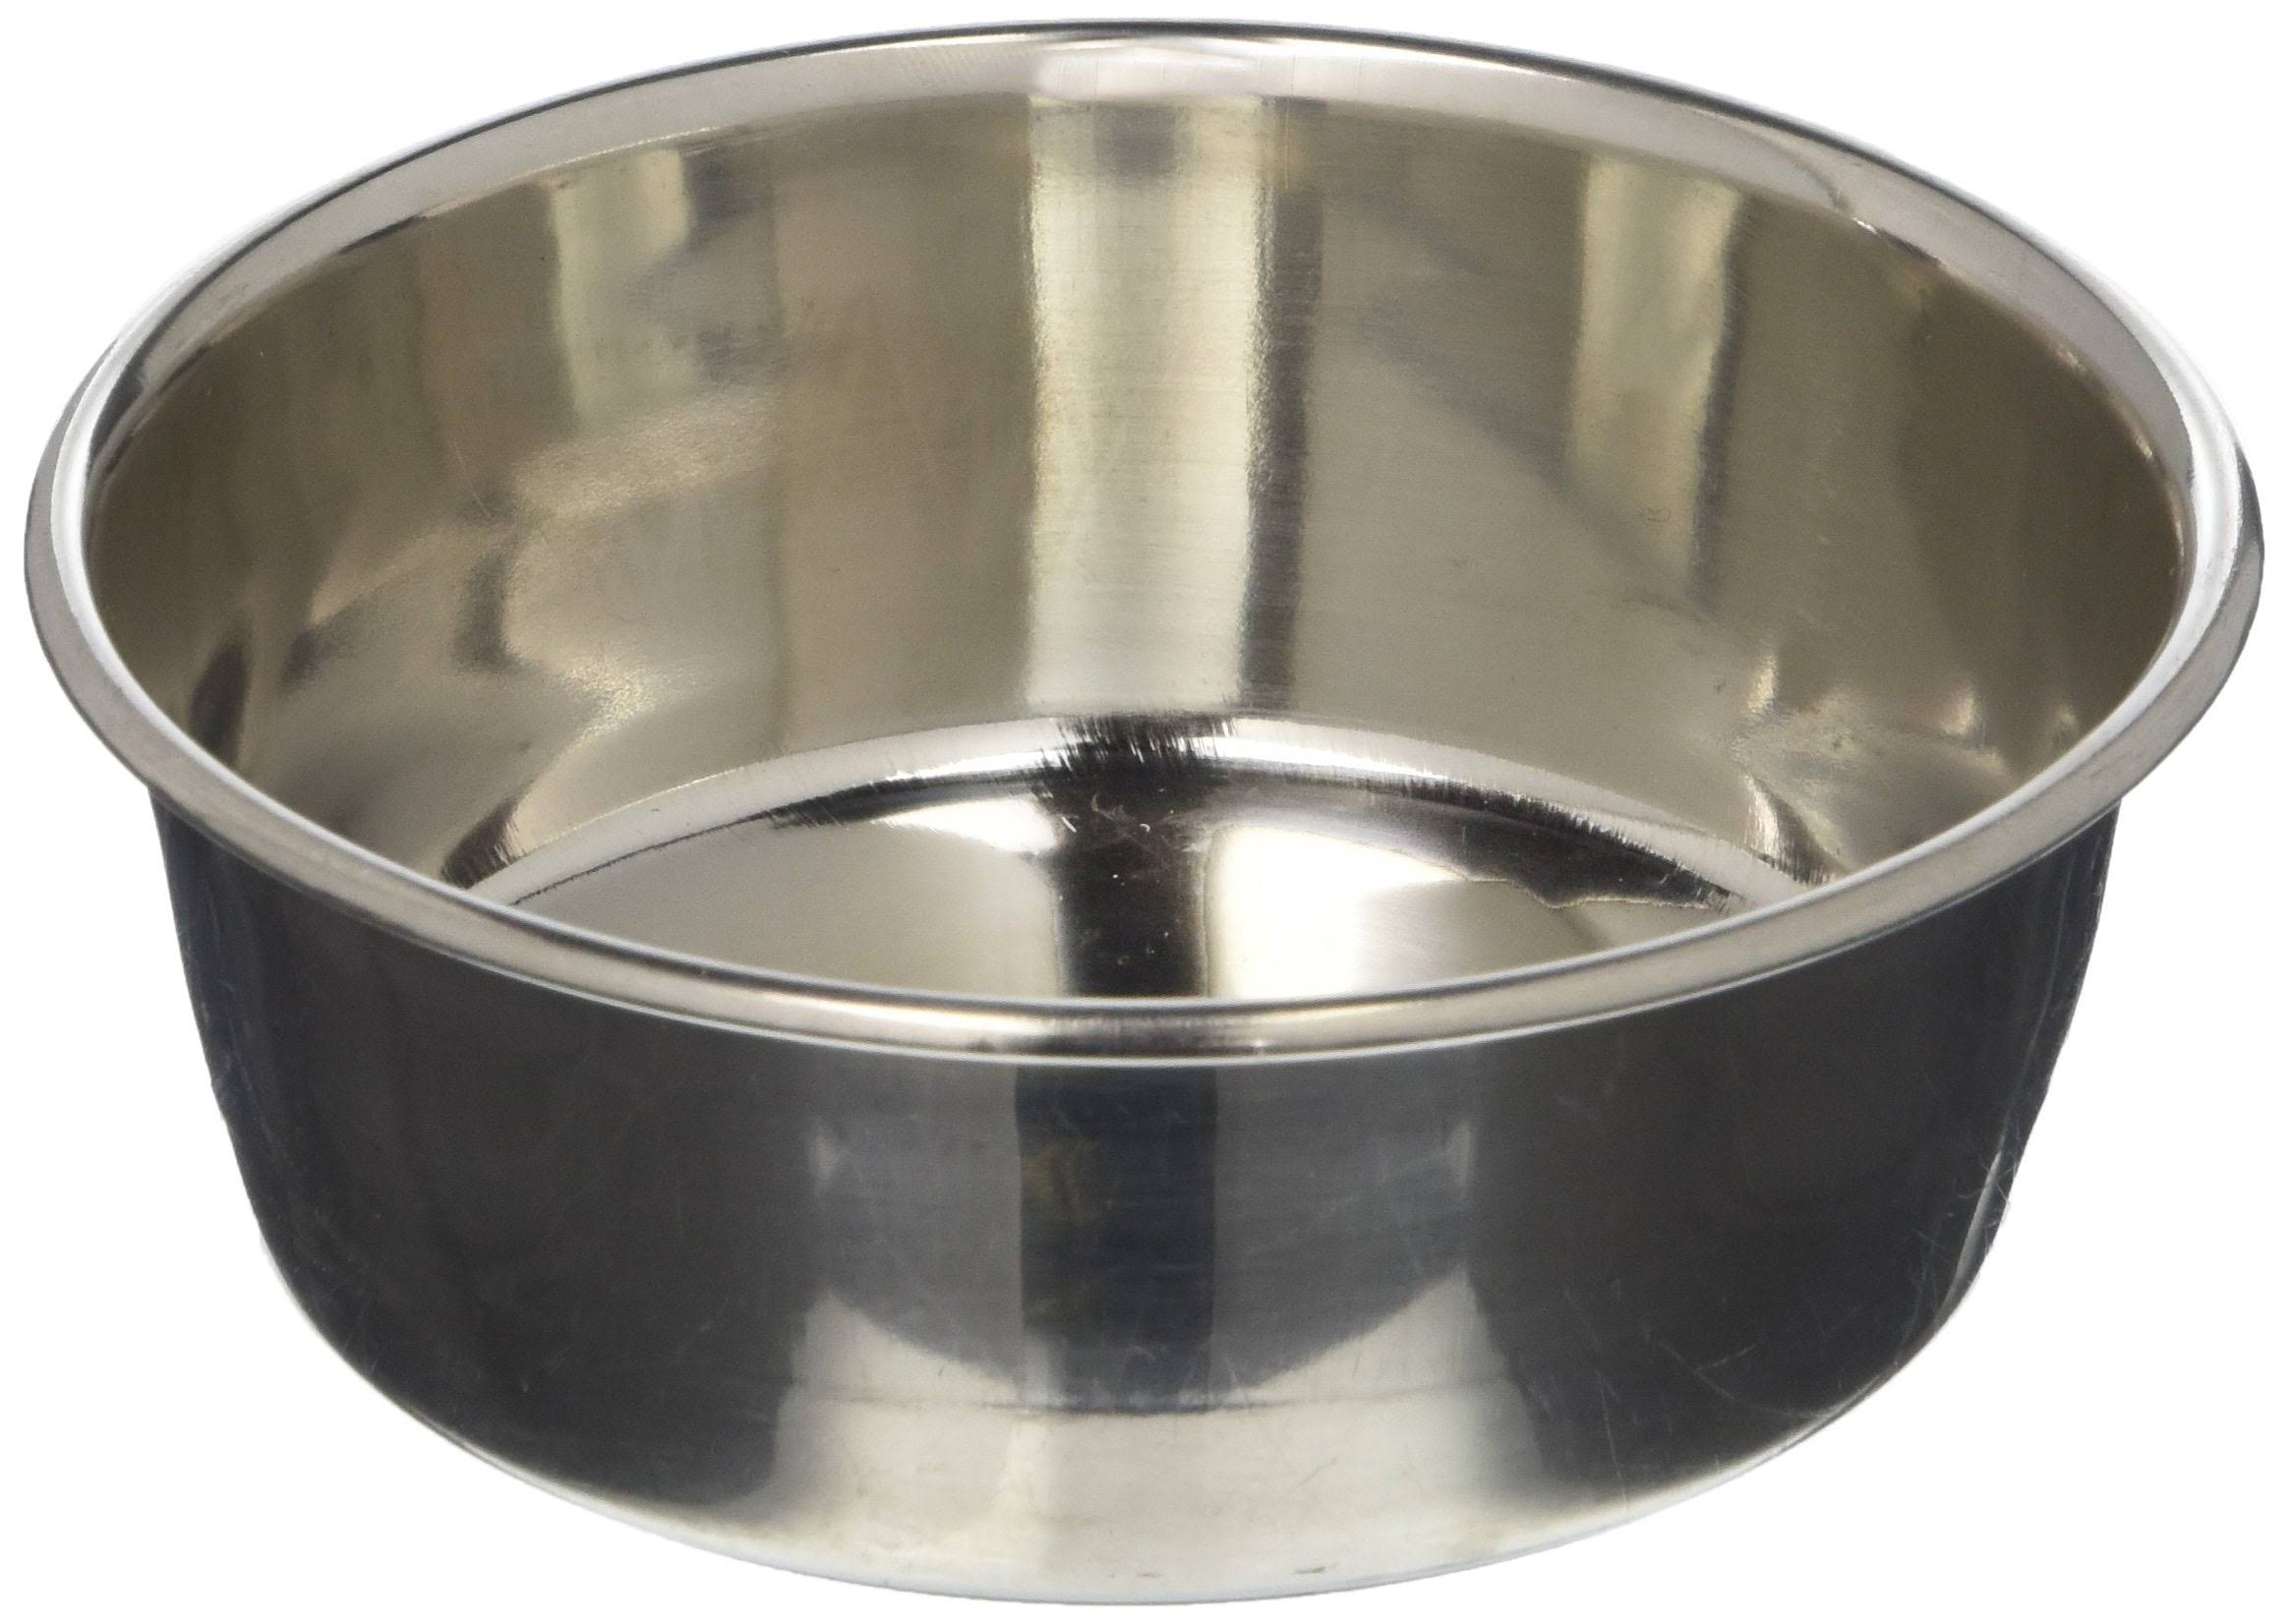 Van Ness Cat Dish - Stainless Steel, 8oz